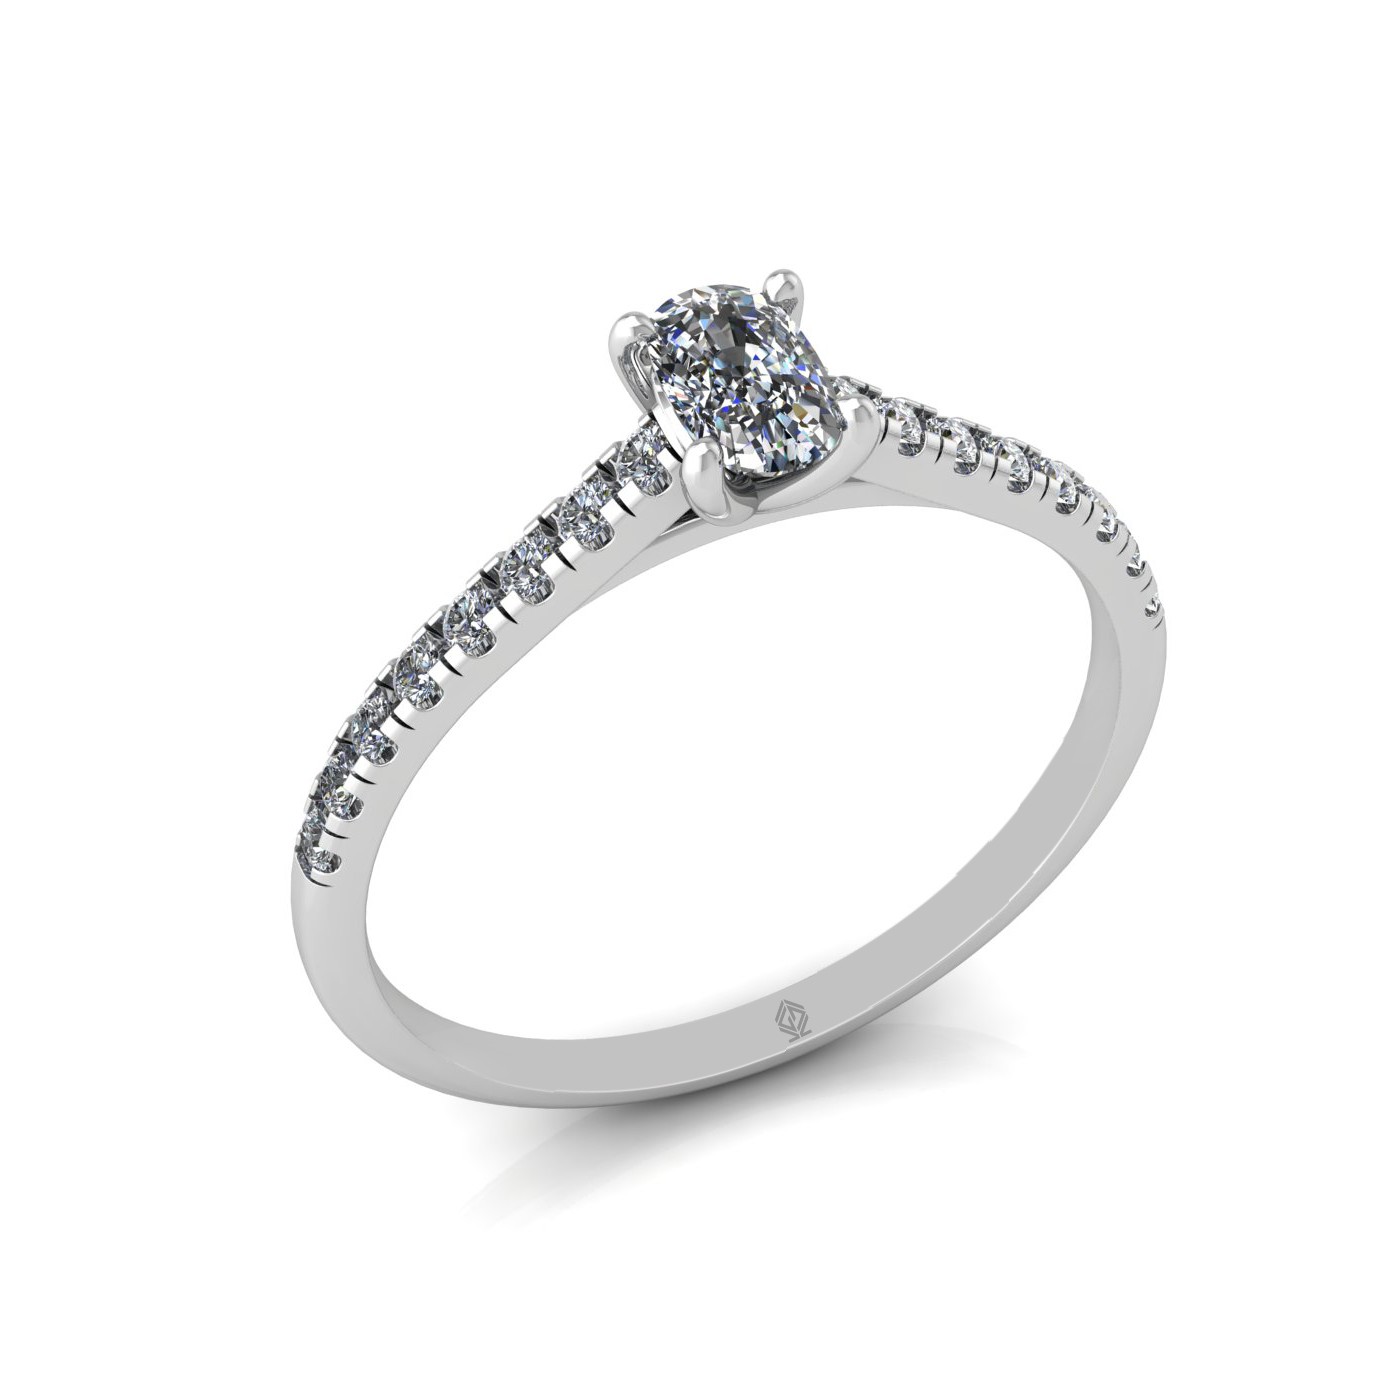 18k white gold  4 prongs elongated cushion cut diamond engagement ring with whisper thin pavÉ set band